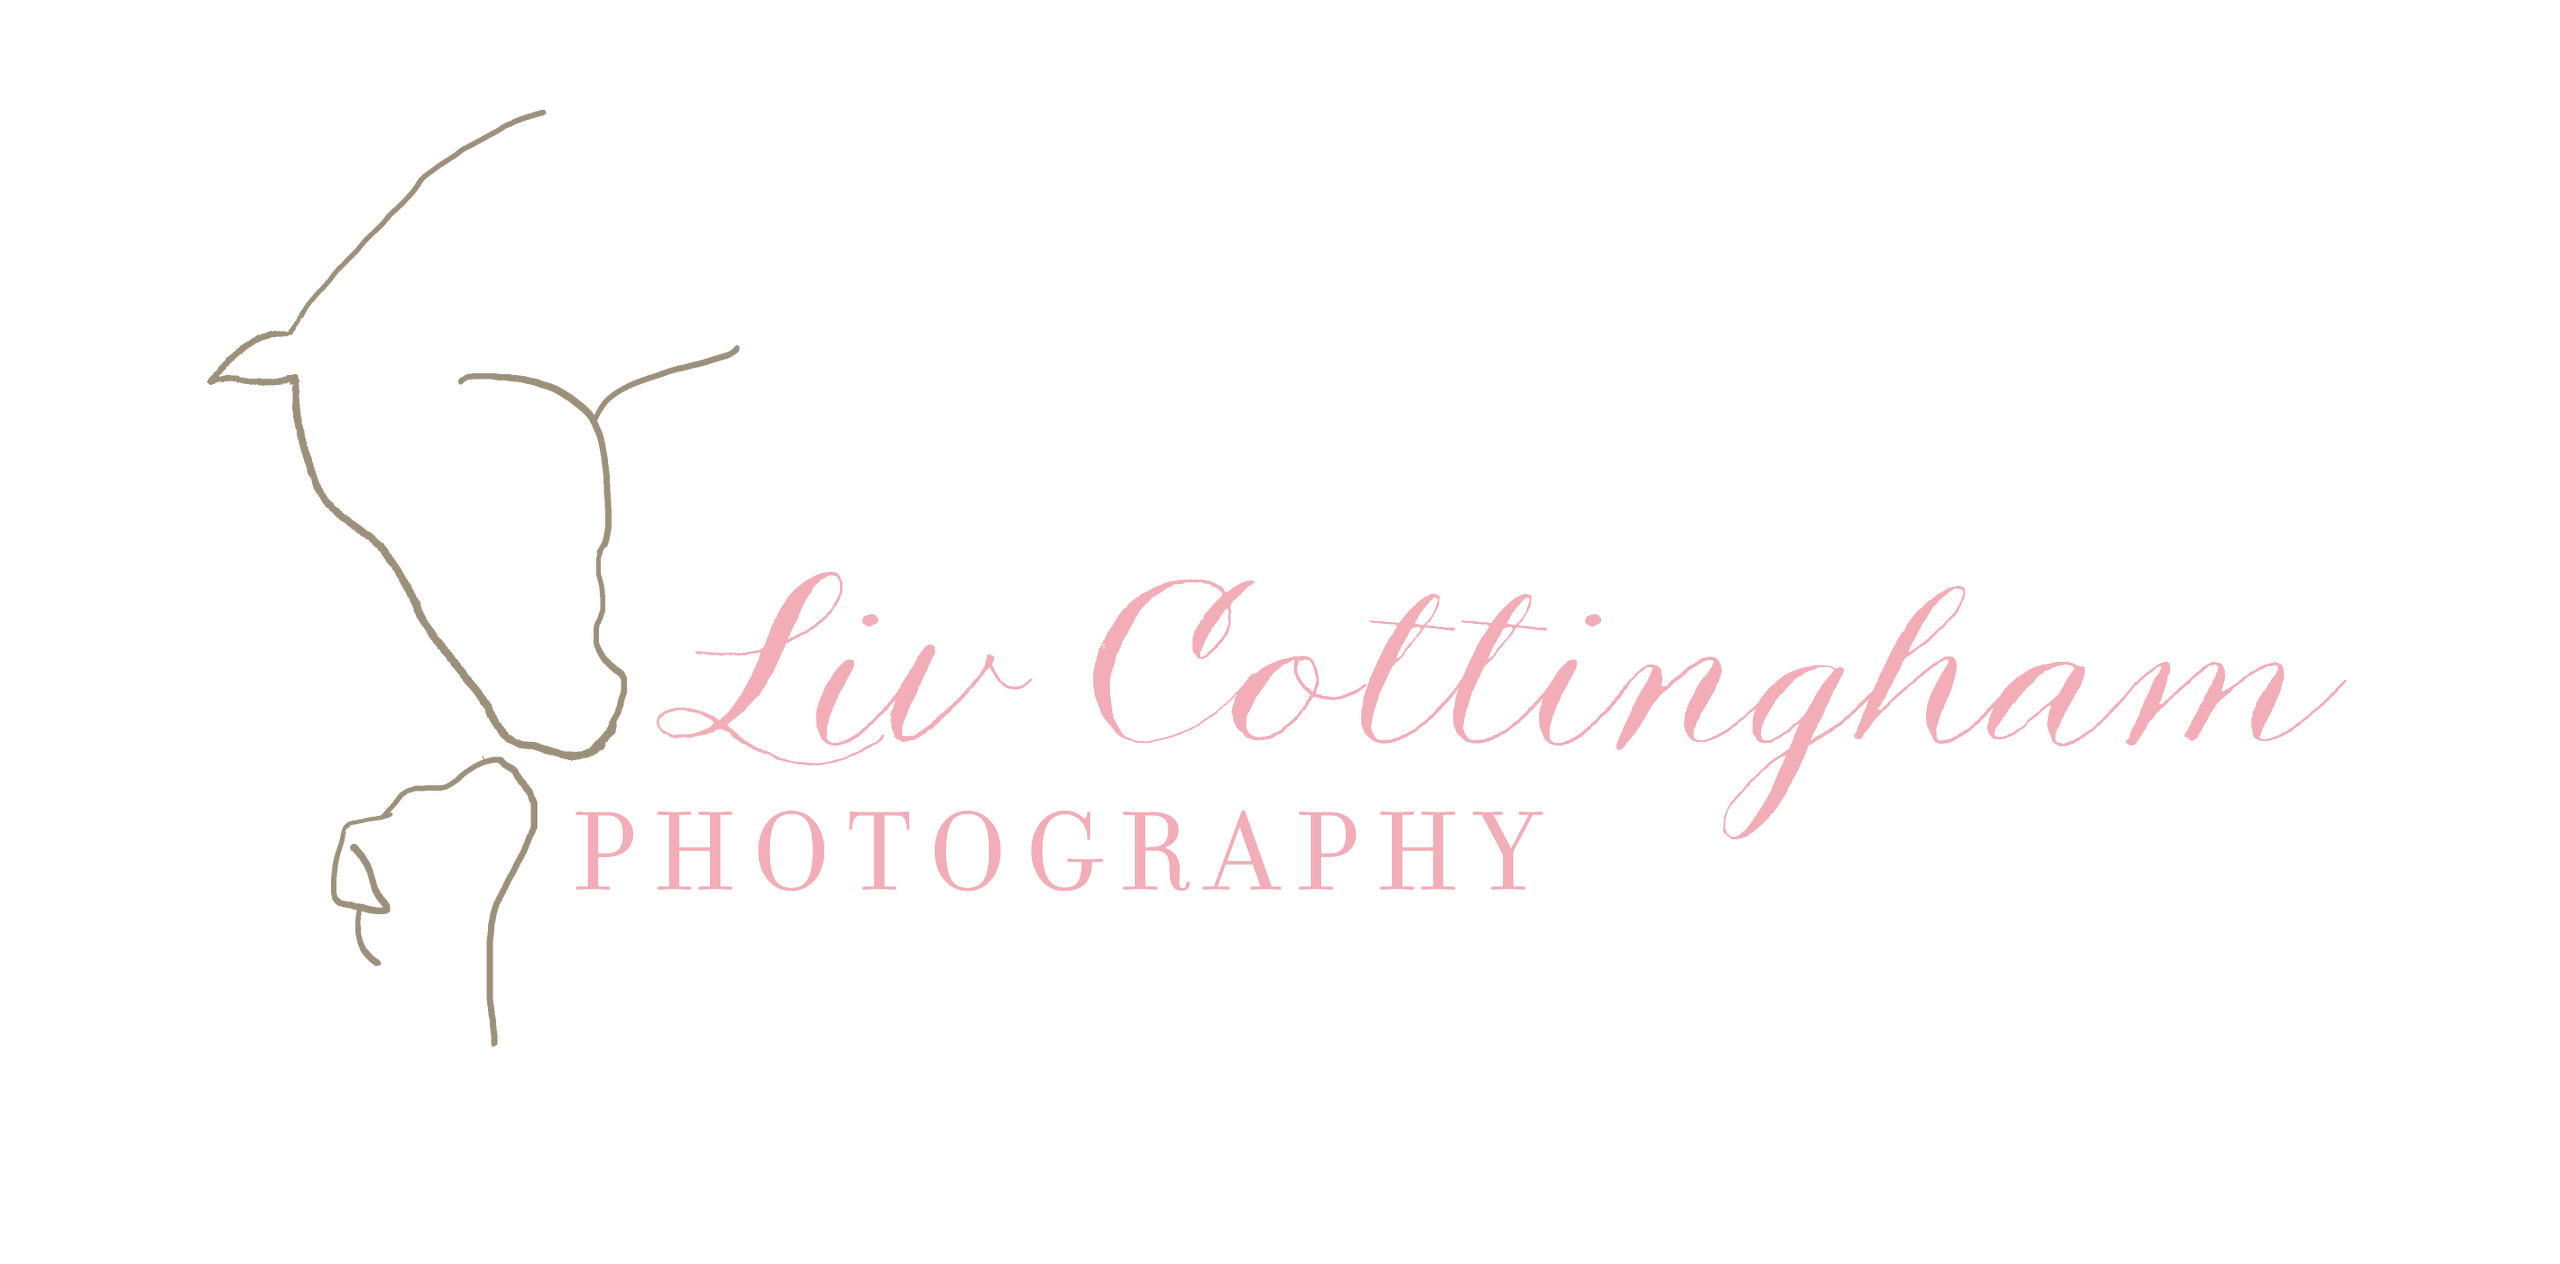 Liv Cottingham Photography